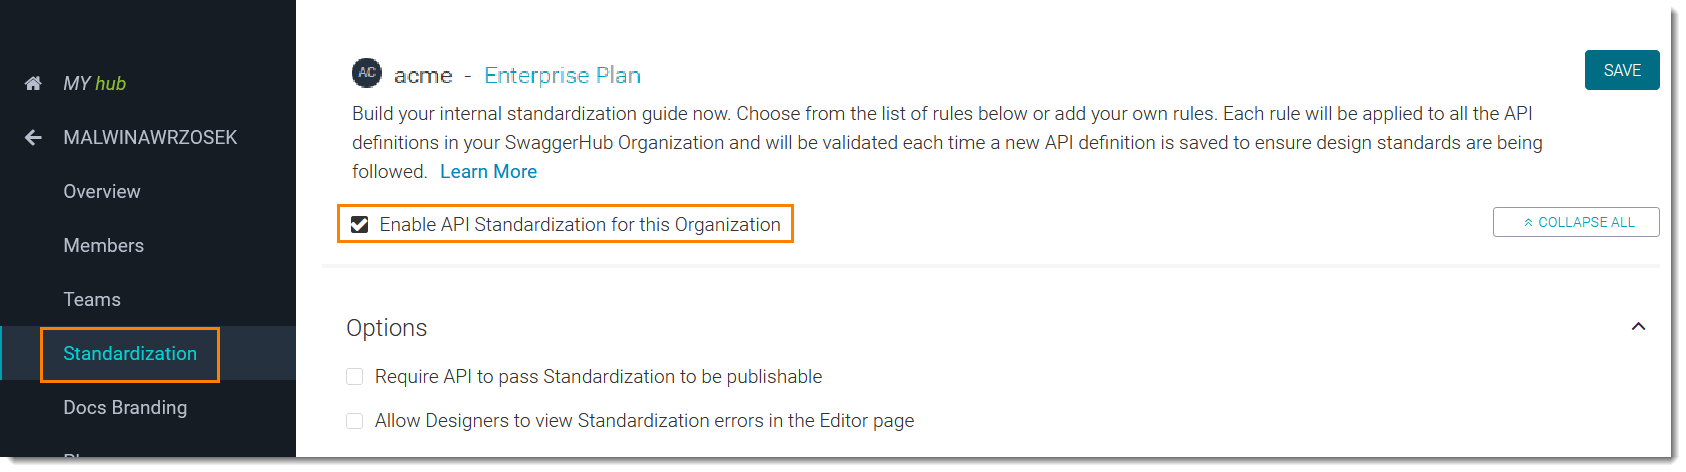 Enable API Standardization for this Organization